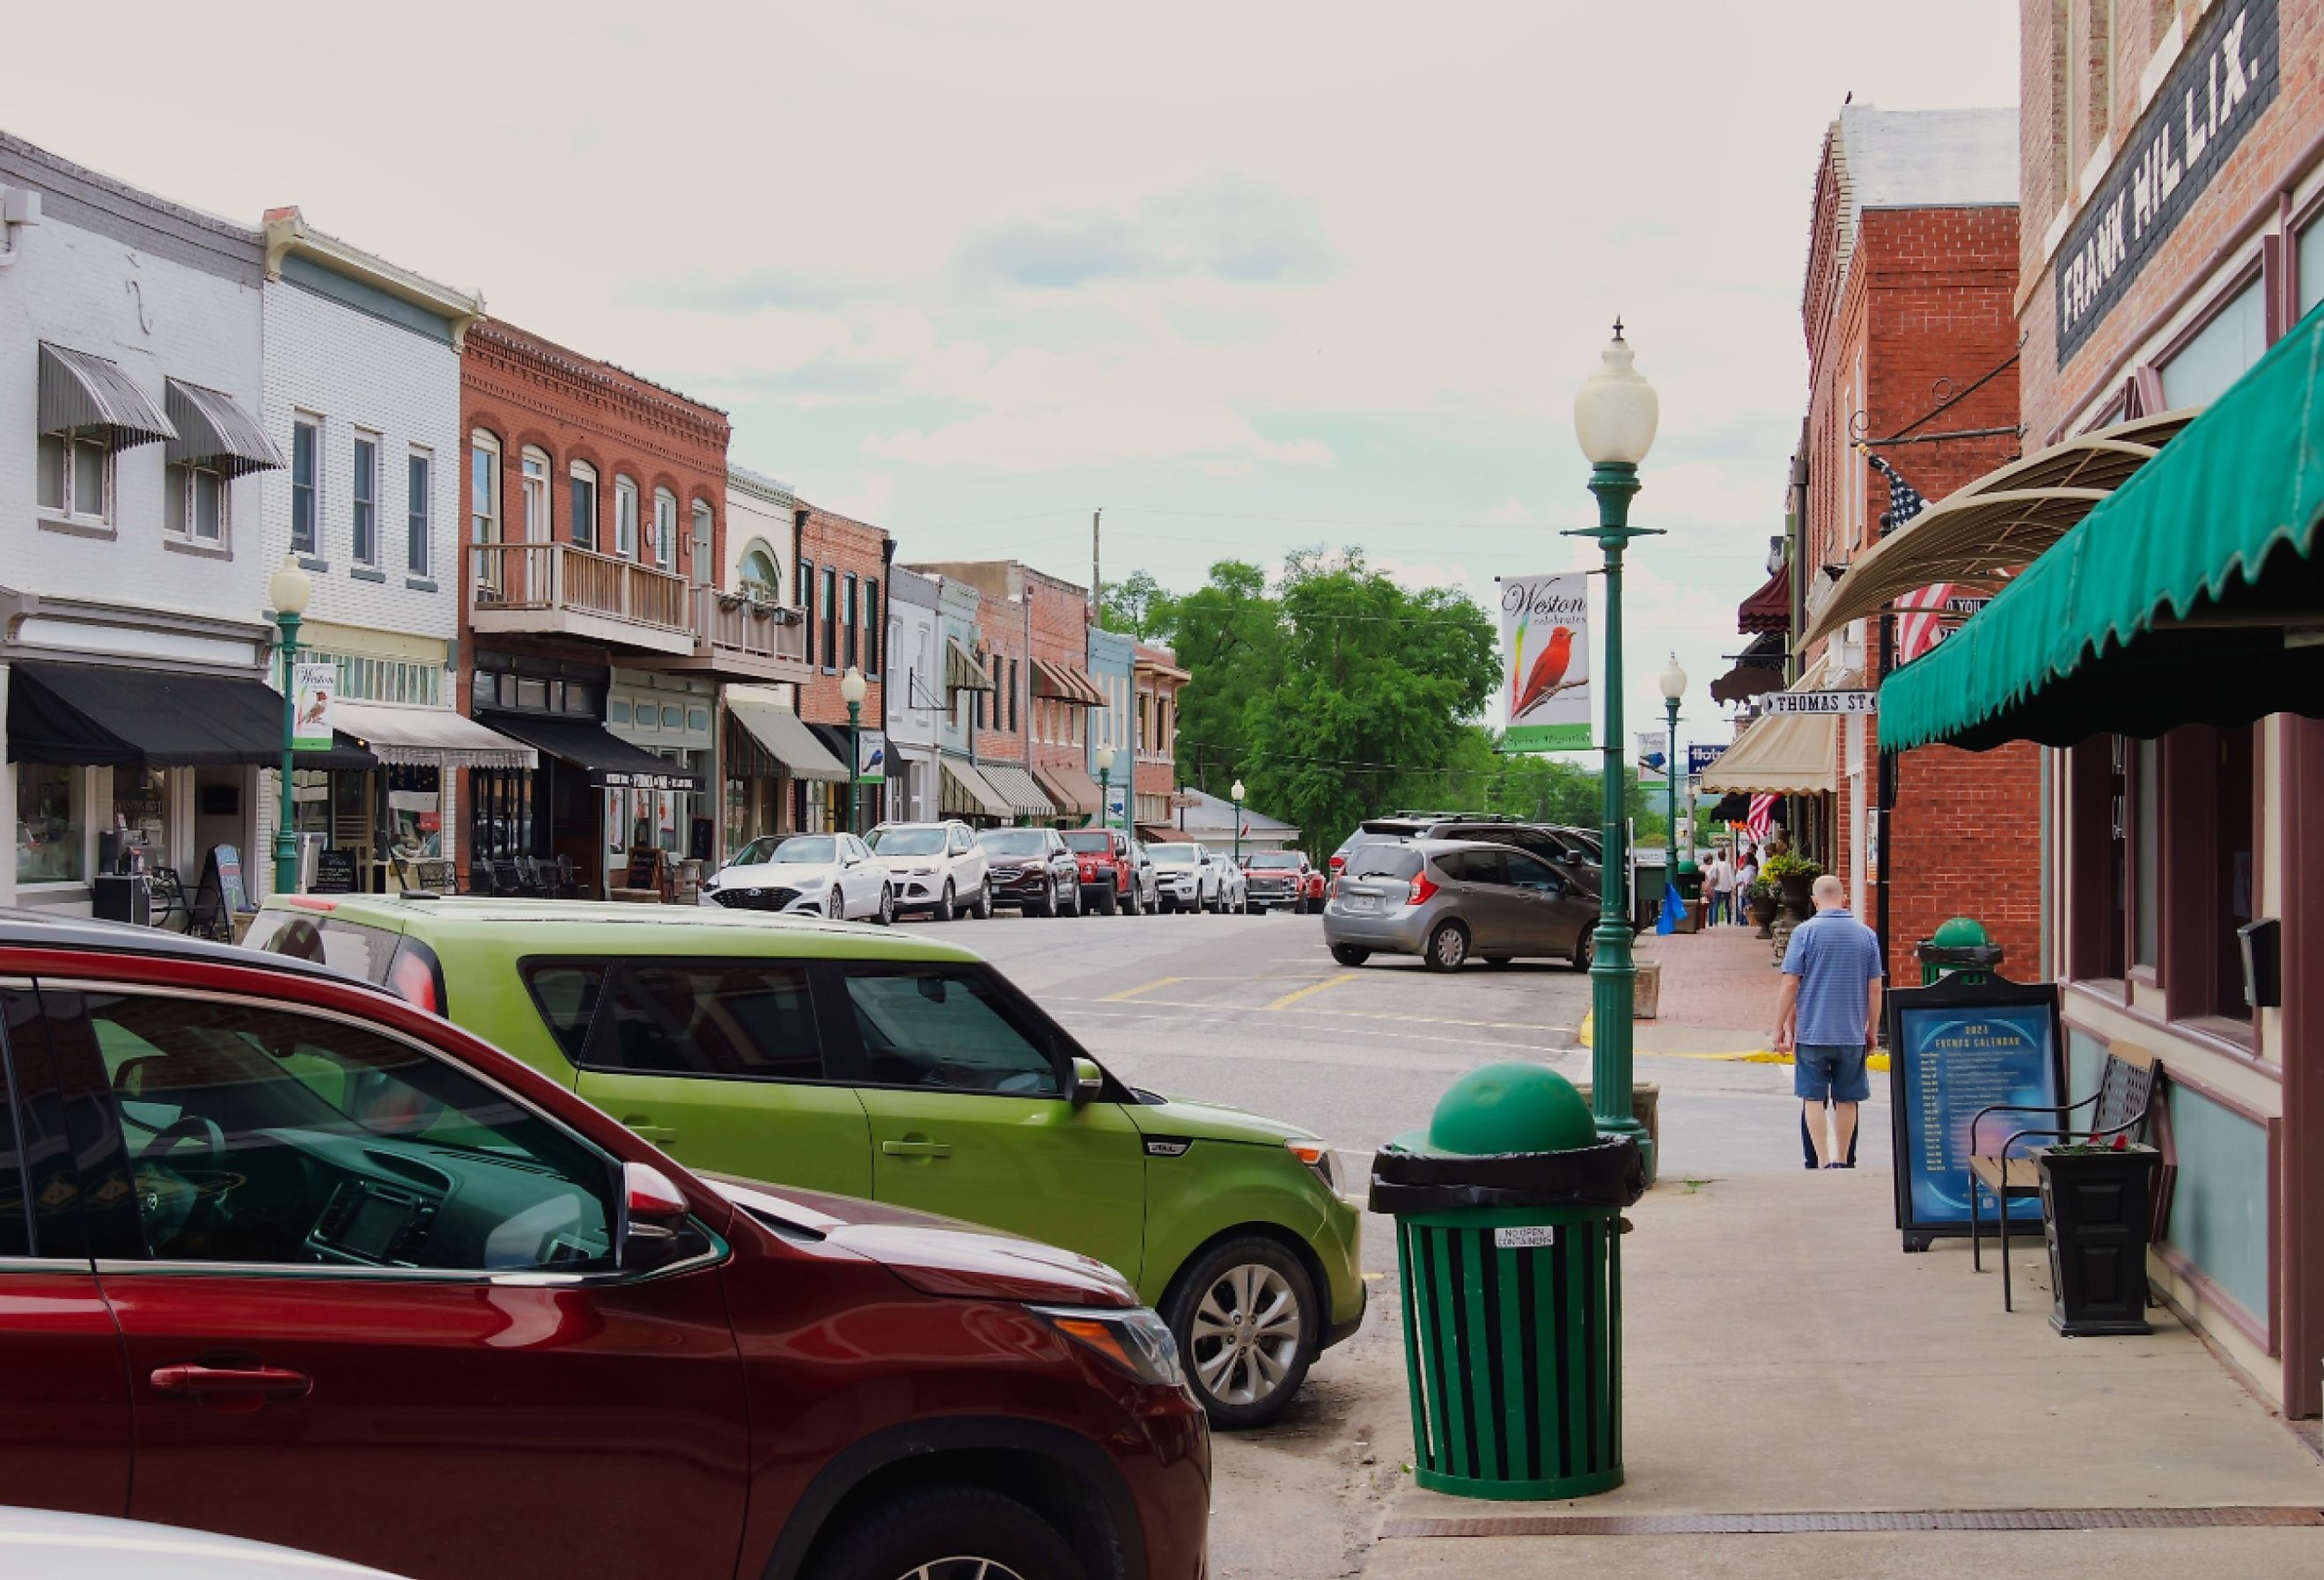 Downtown Main Street in Weston, Missouri. Image credit Matt Fowler KC via Shutterstock